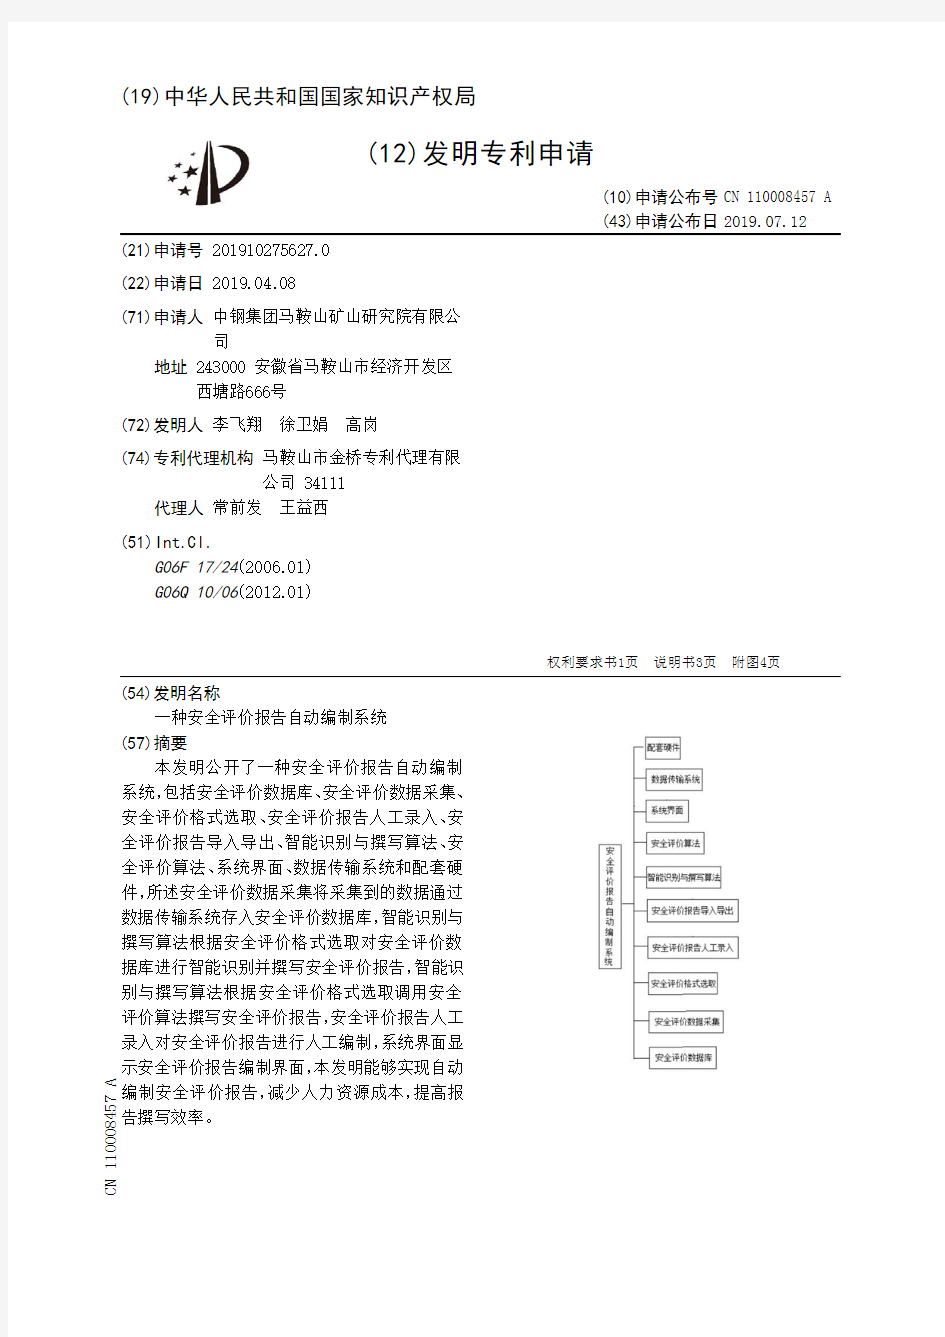 【CN110008457A】一种安全评价报告自动编制系统【专利】